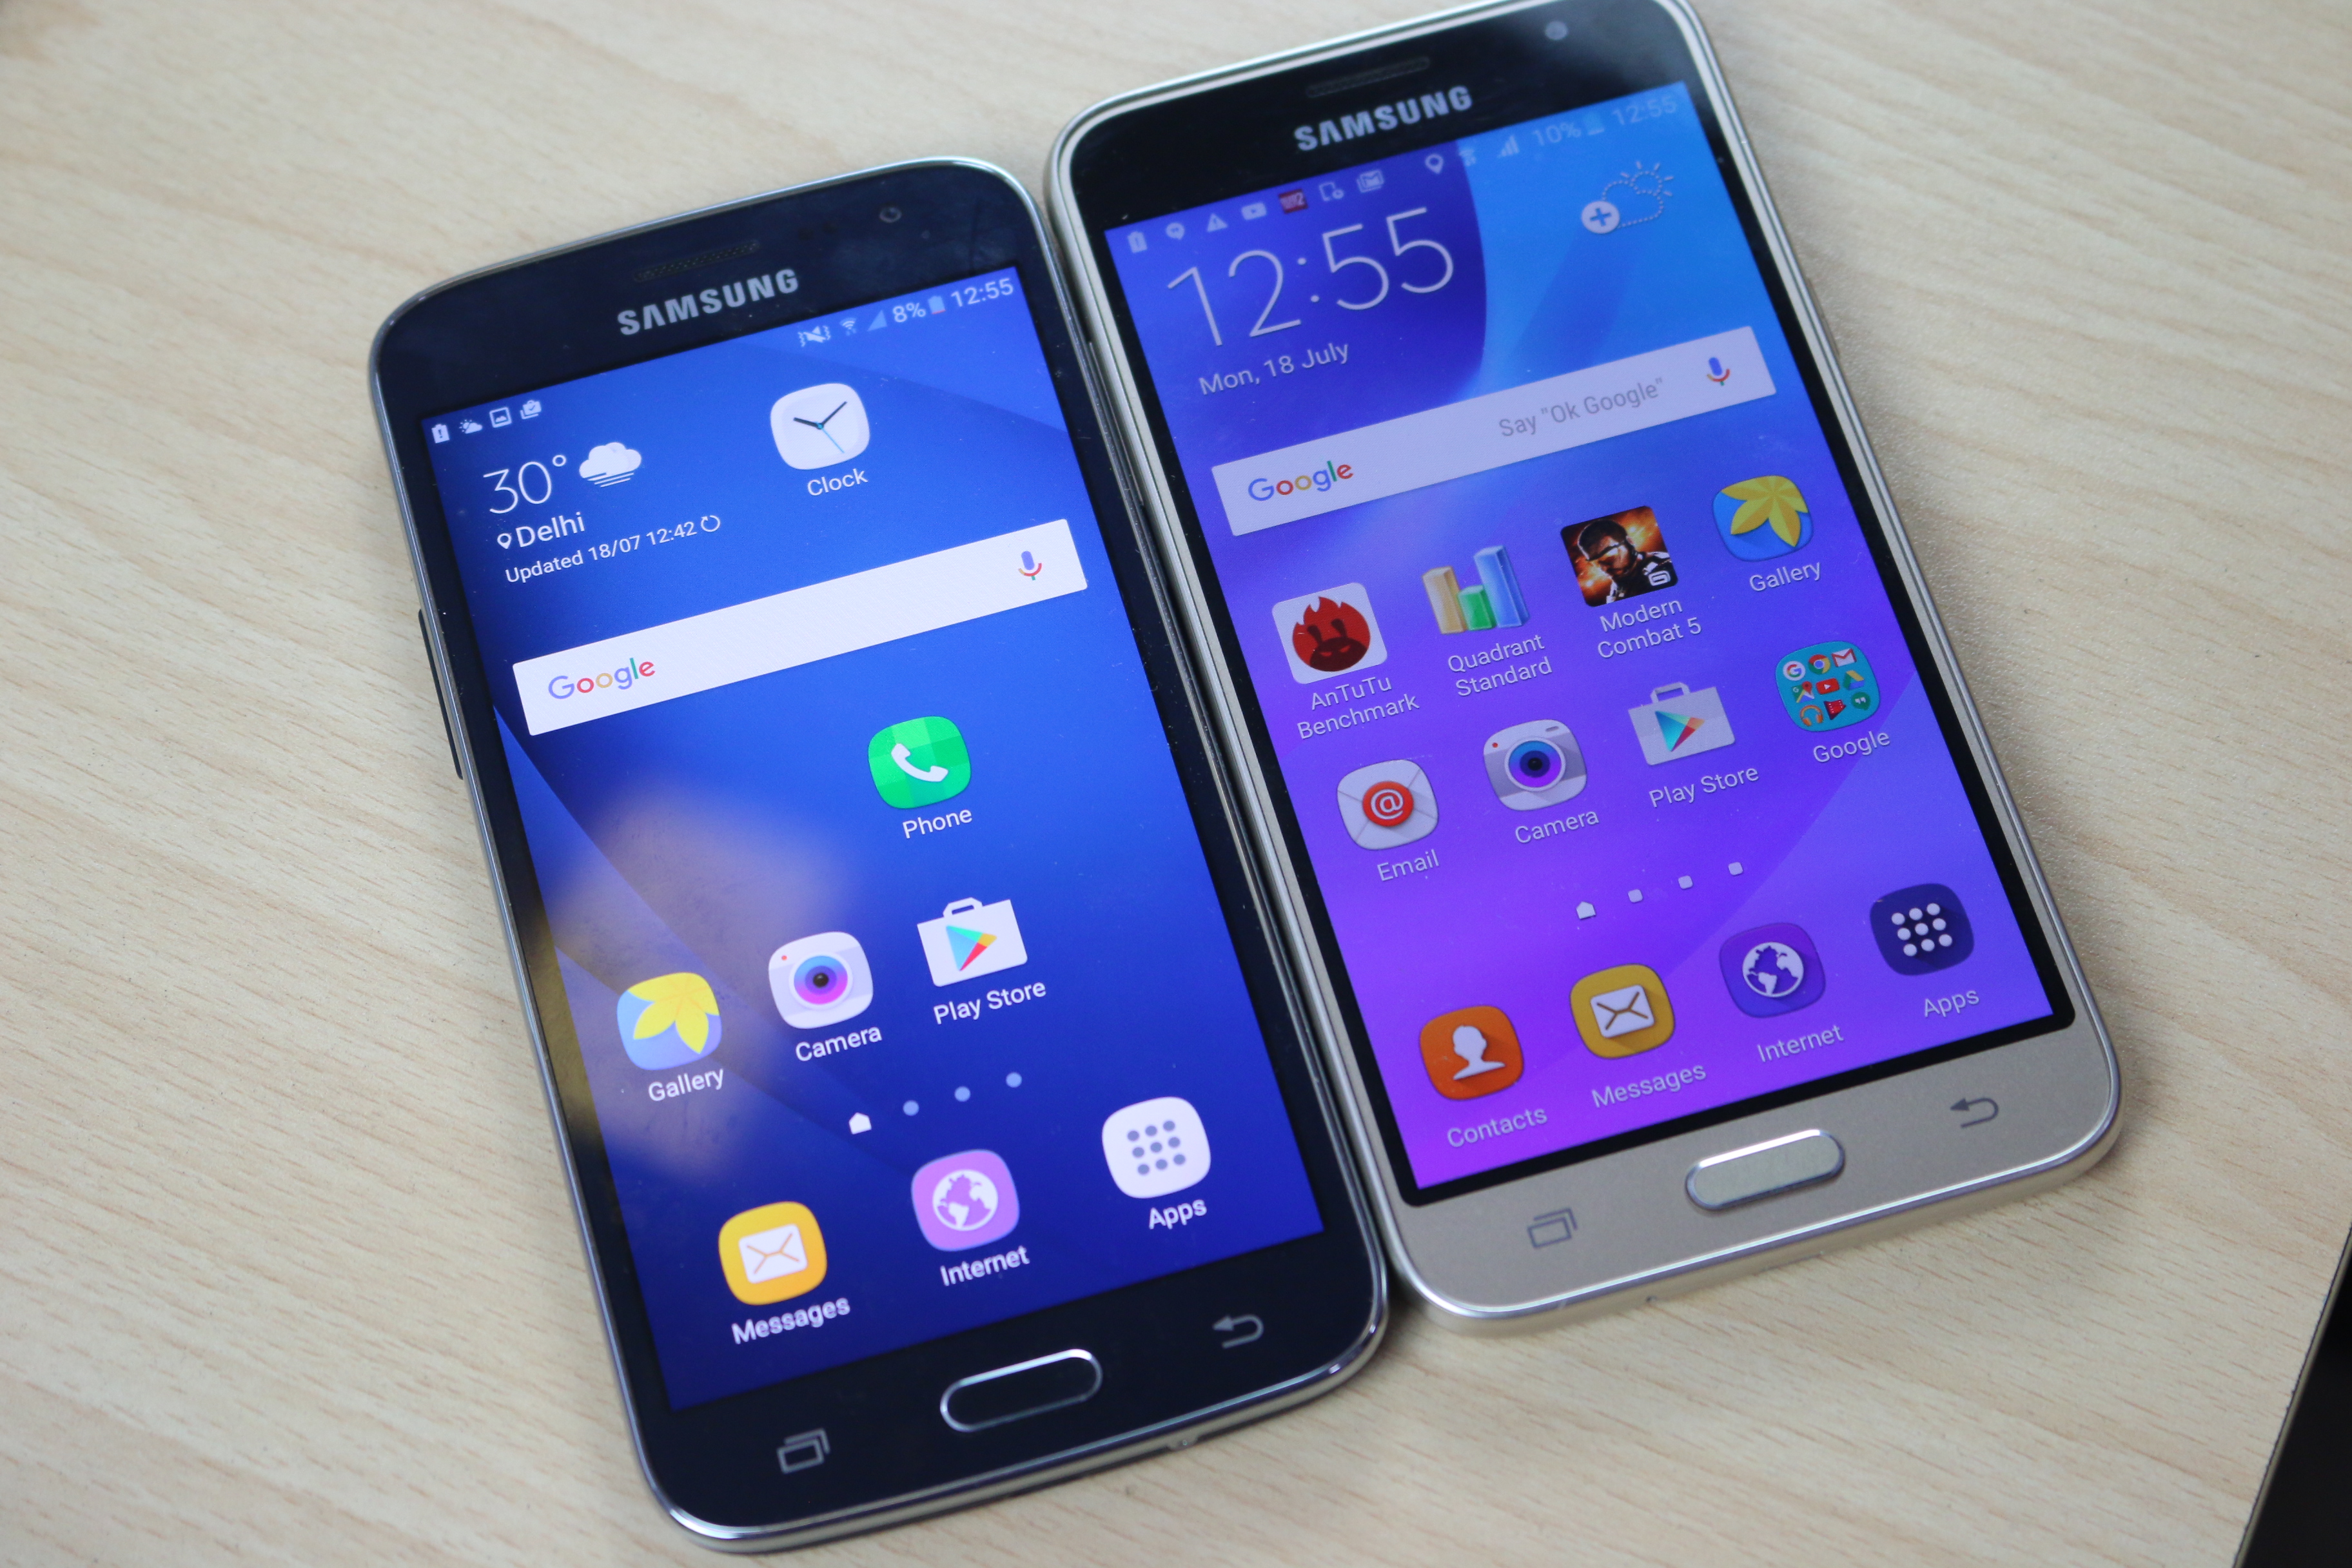 Samsung Galaxy J2 16 Vs Galaxy J3 16 Comparison Review Gadgets To Use